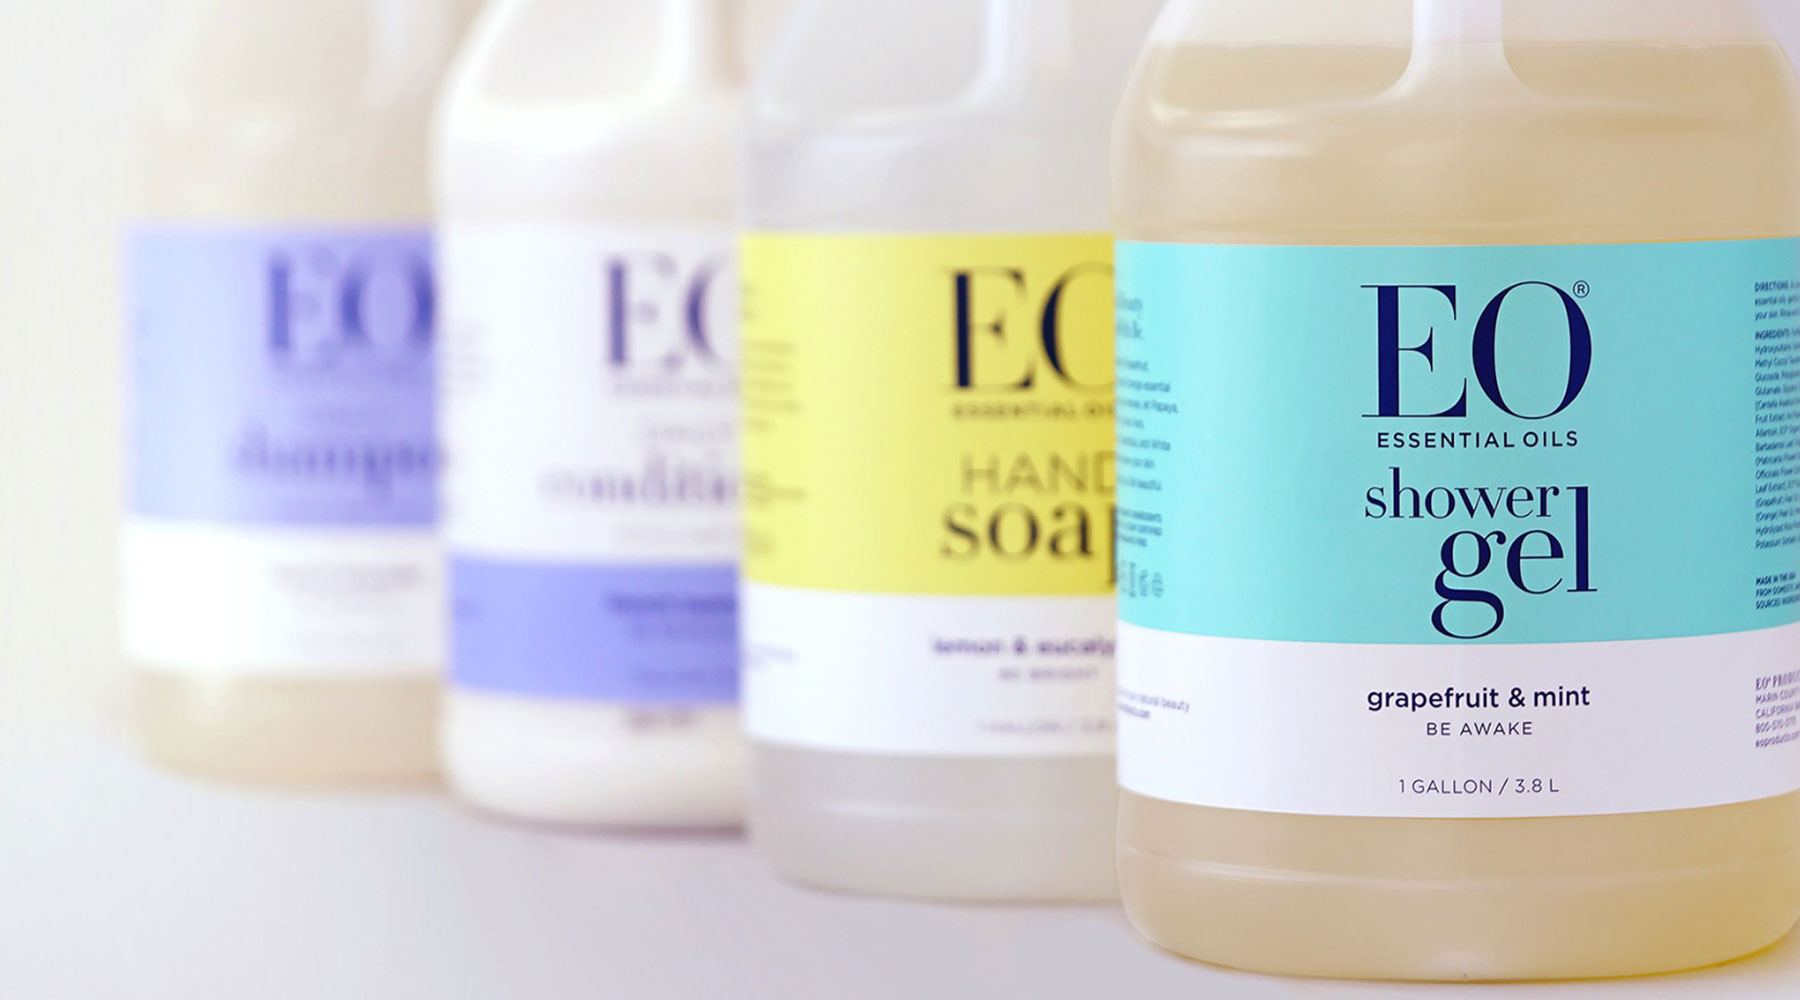 EO Bath & Body products